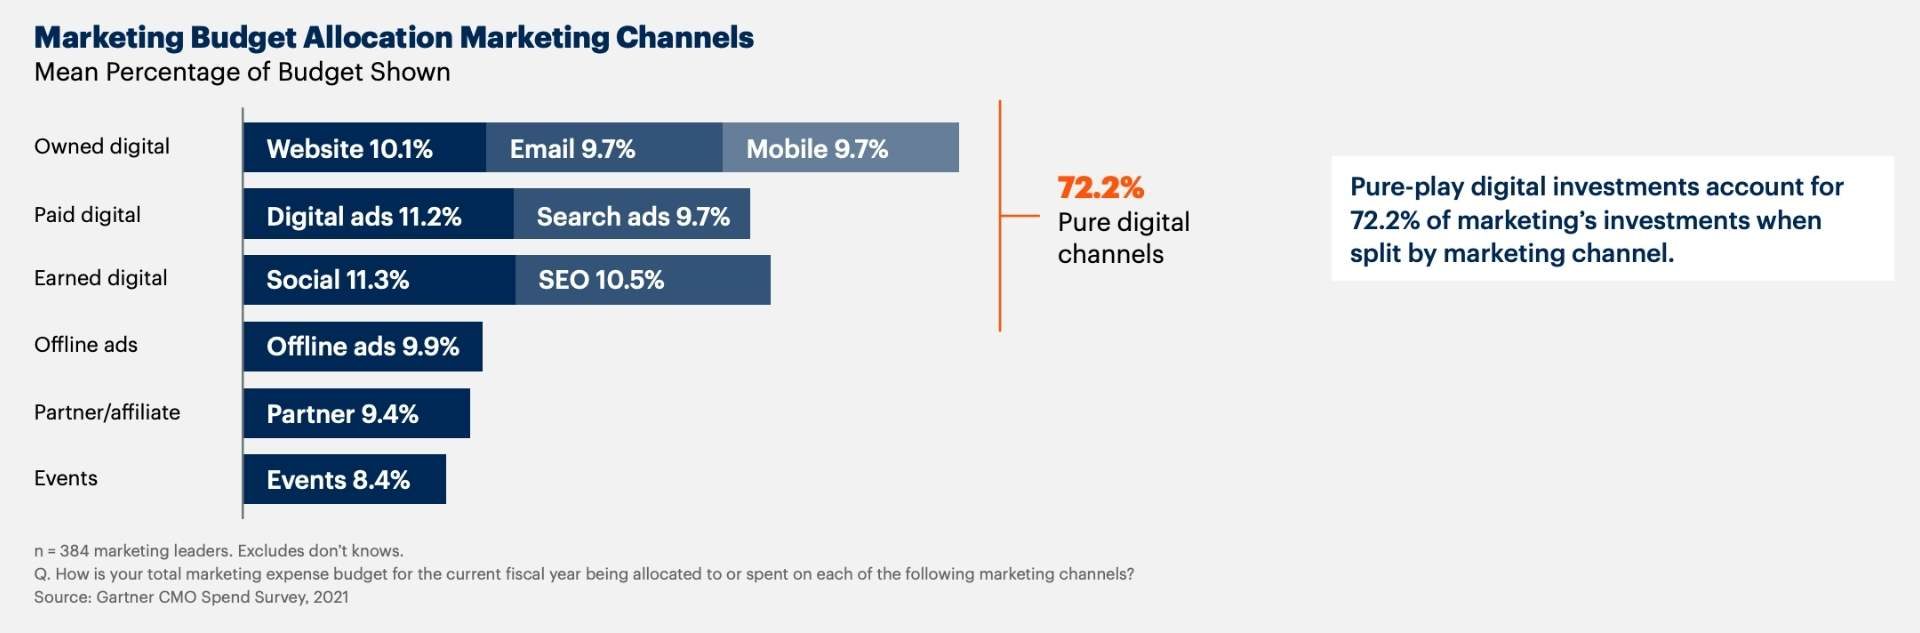 Digital channels dominate marketing budgets